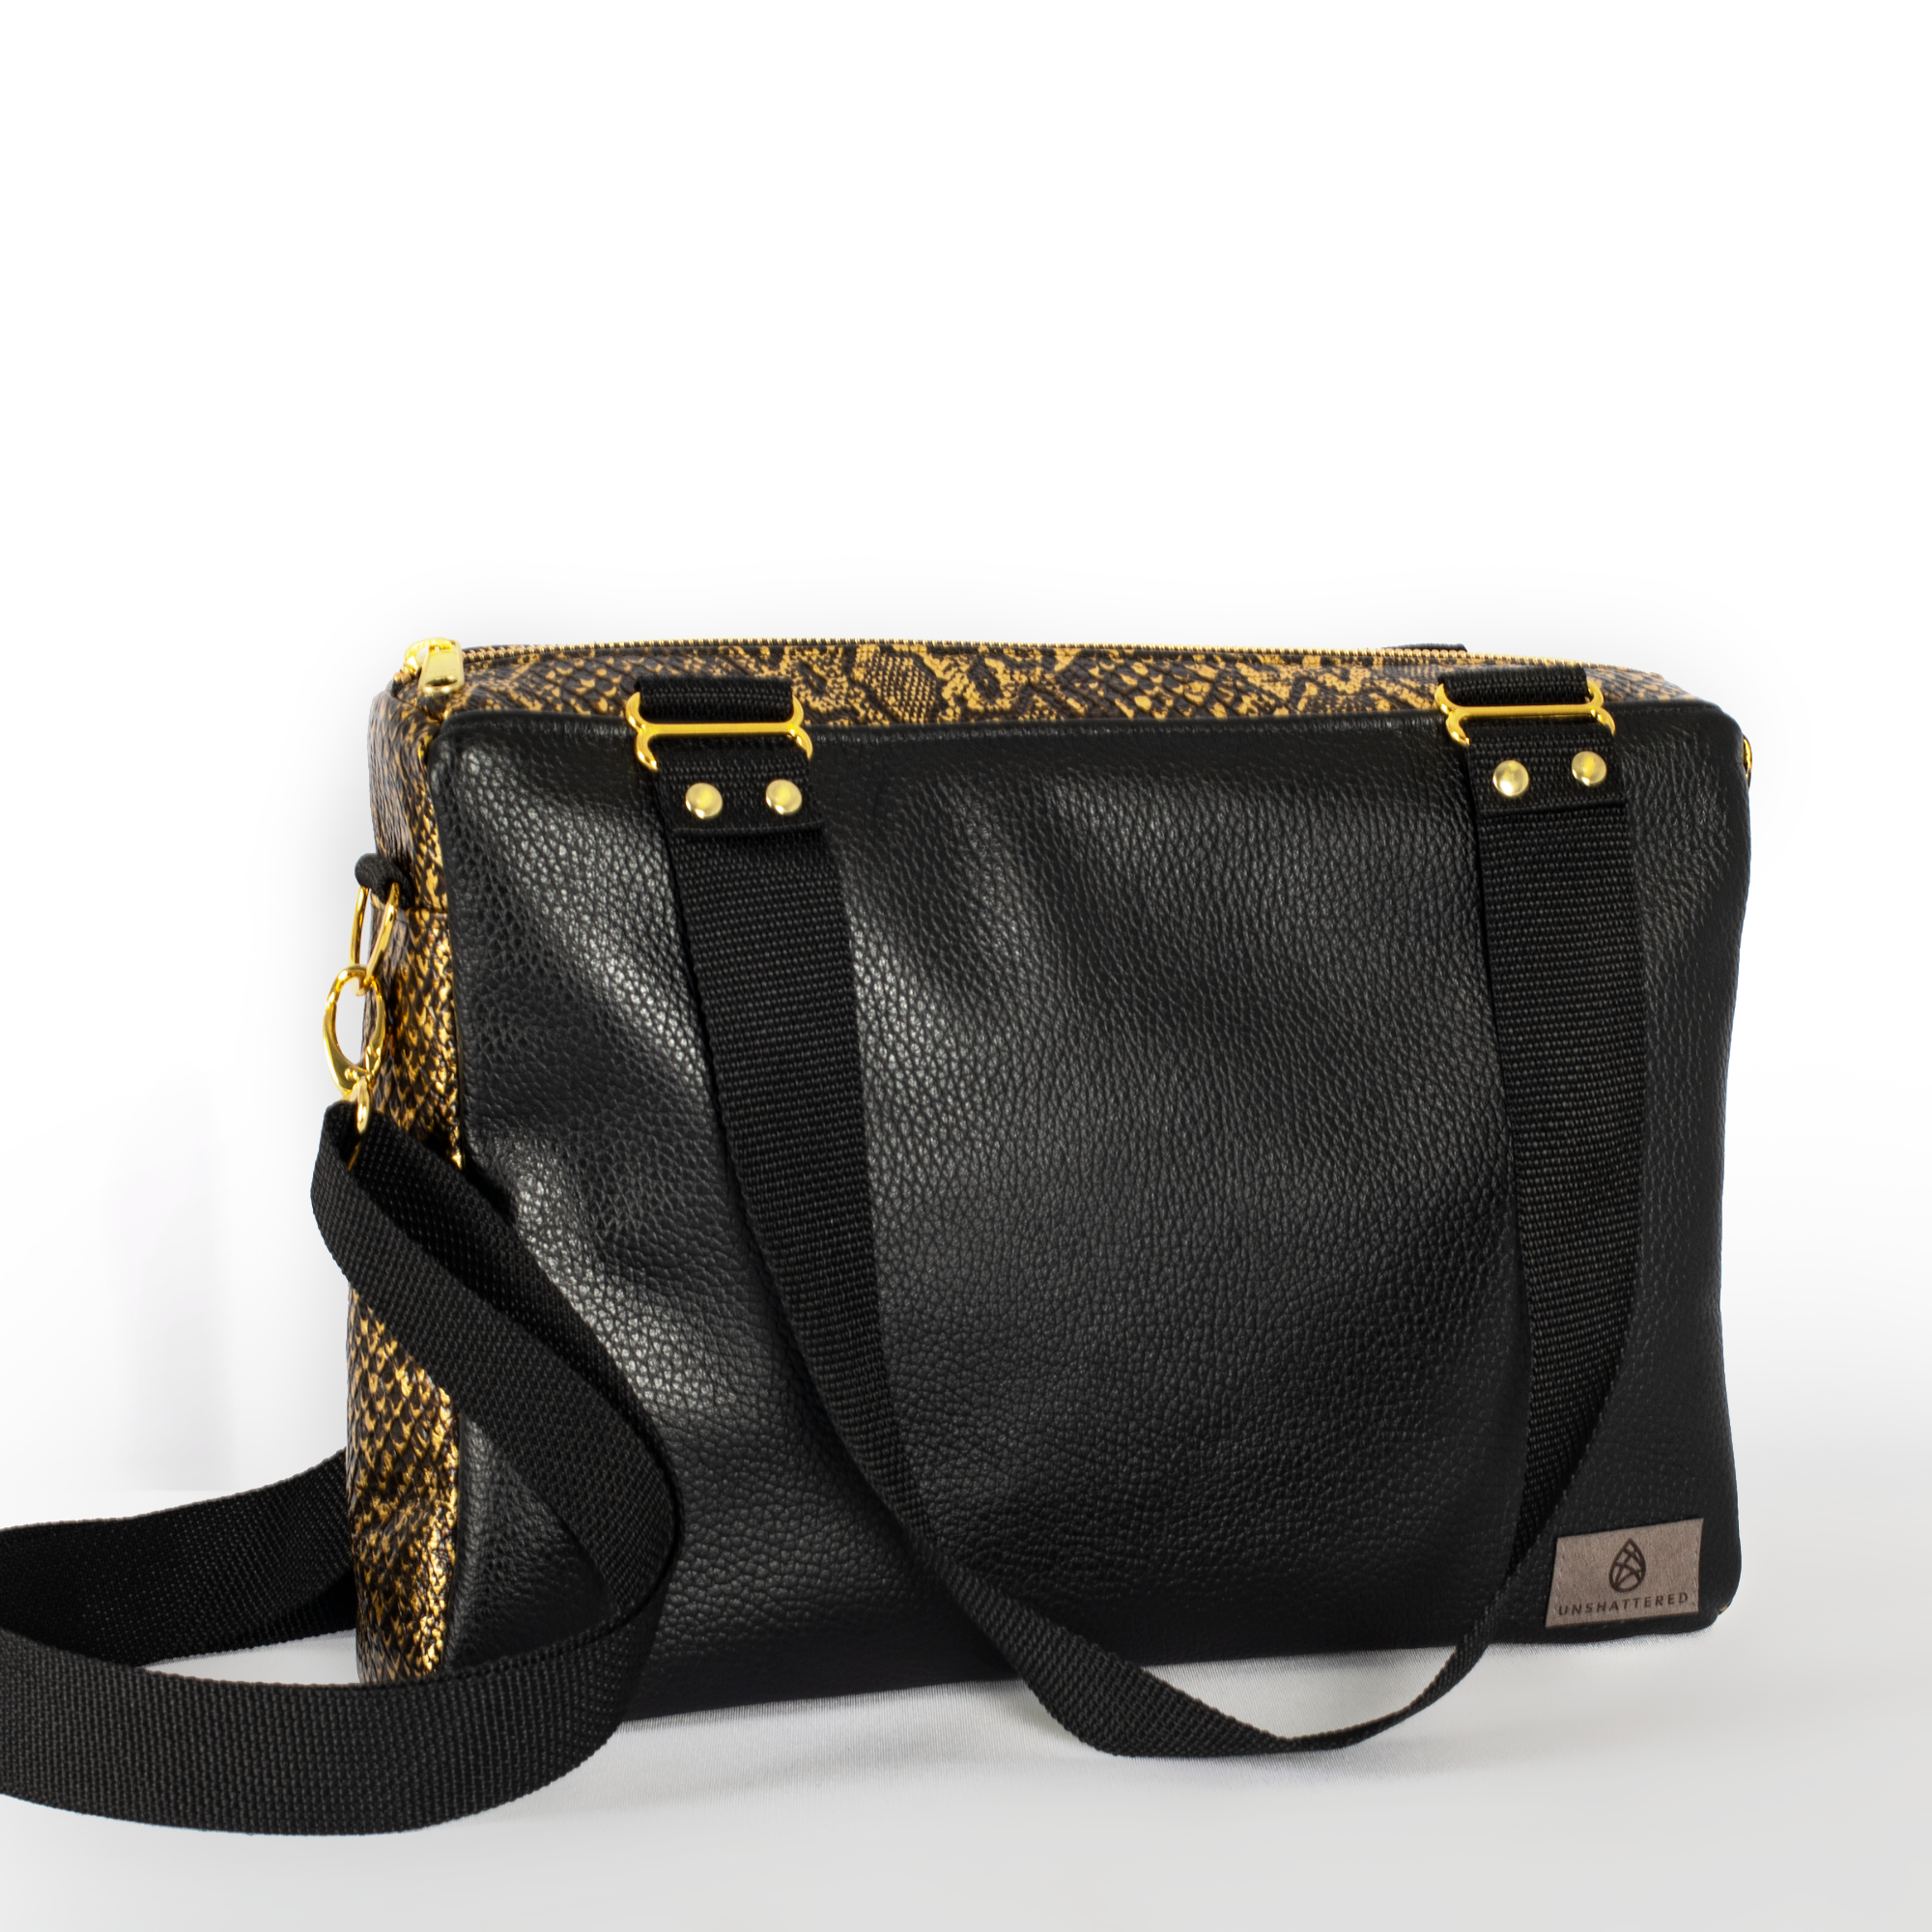 Wayne Leather Convertible Handbag